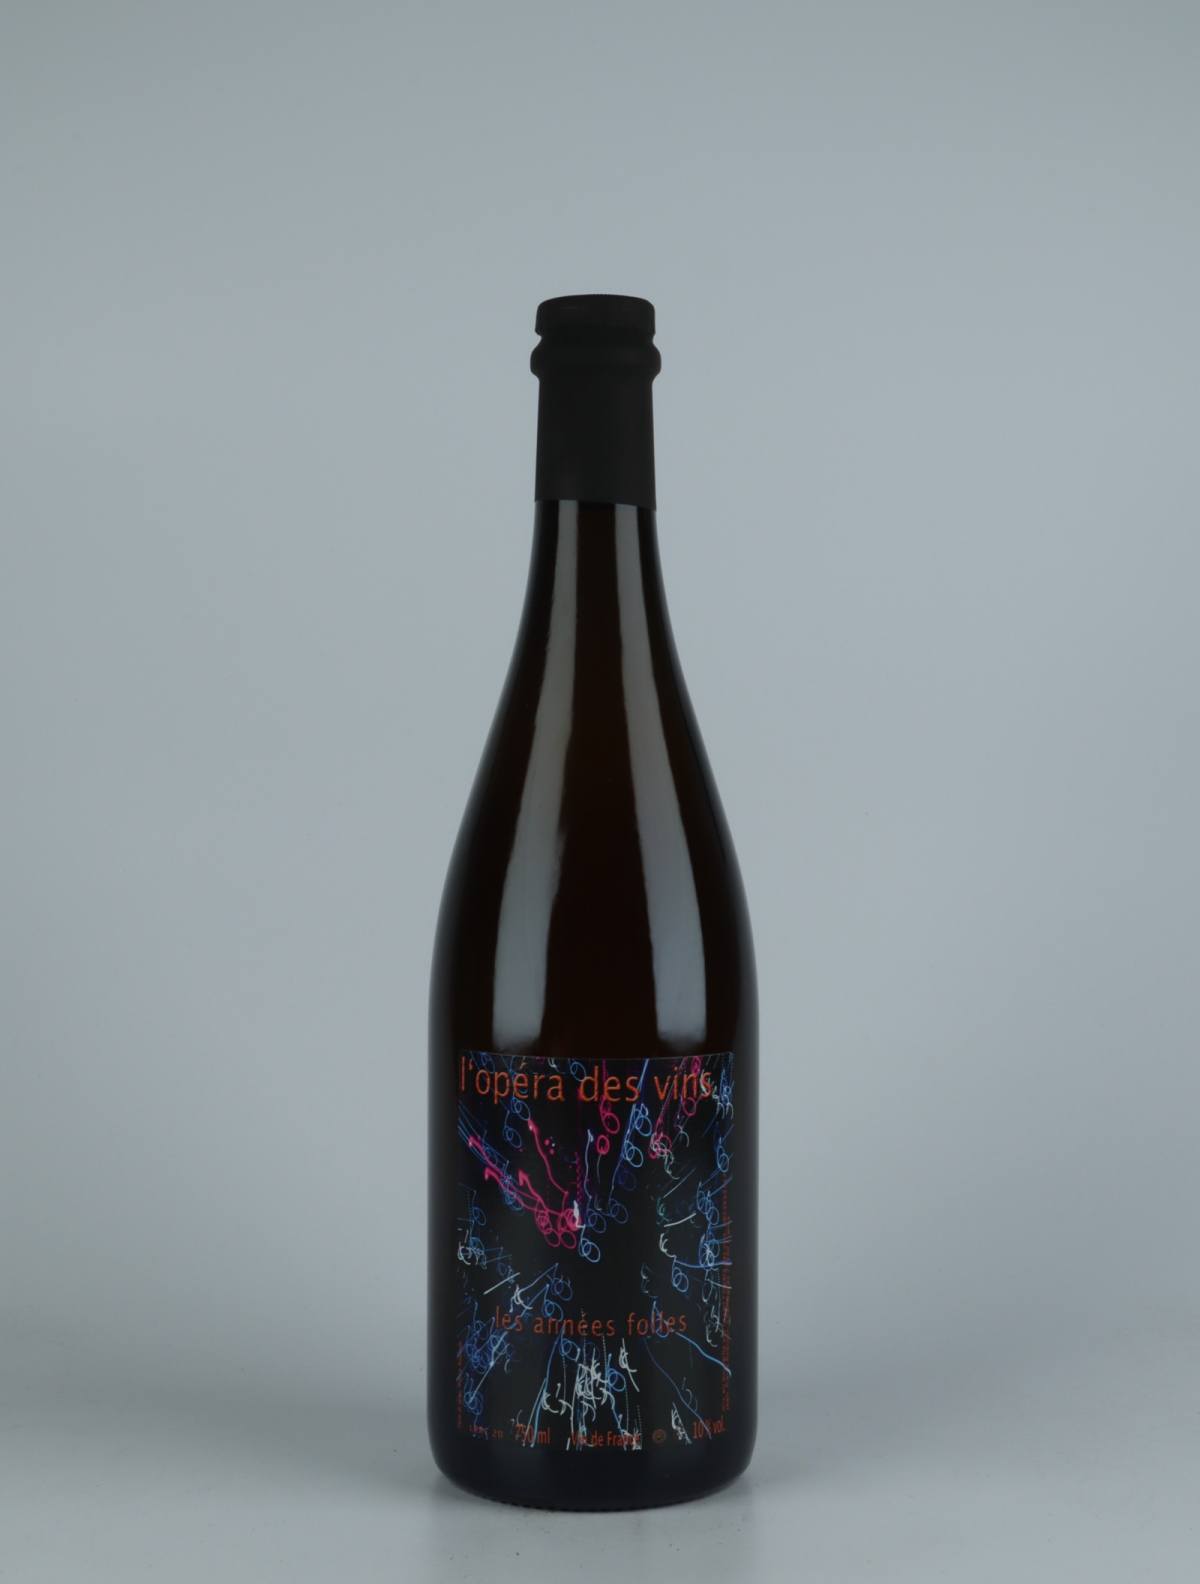 A bottle 2020 Les Années Folles Sparkling from , Loire in France